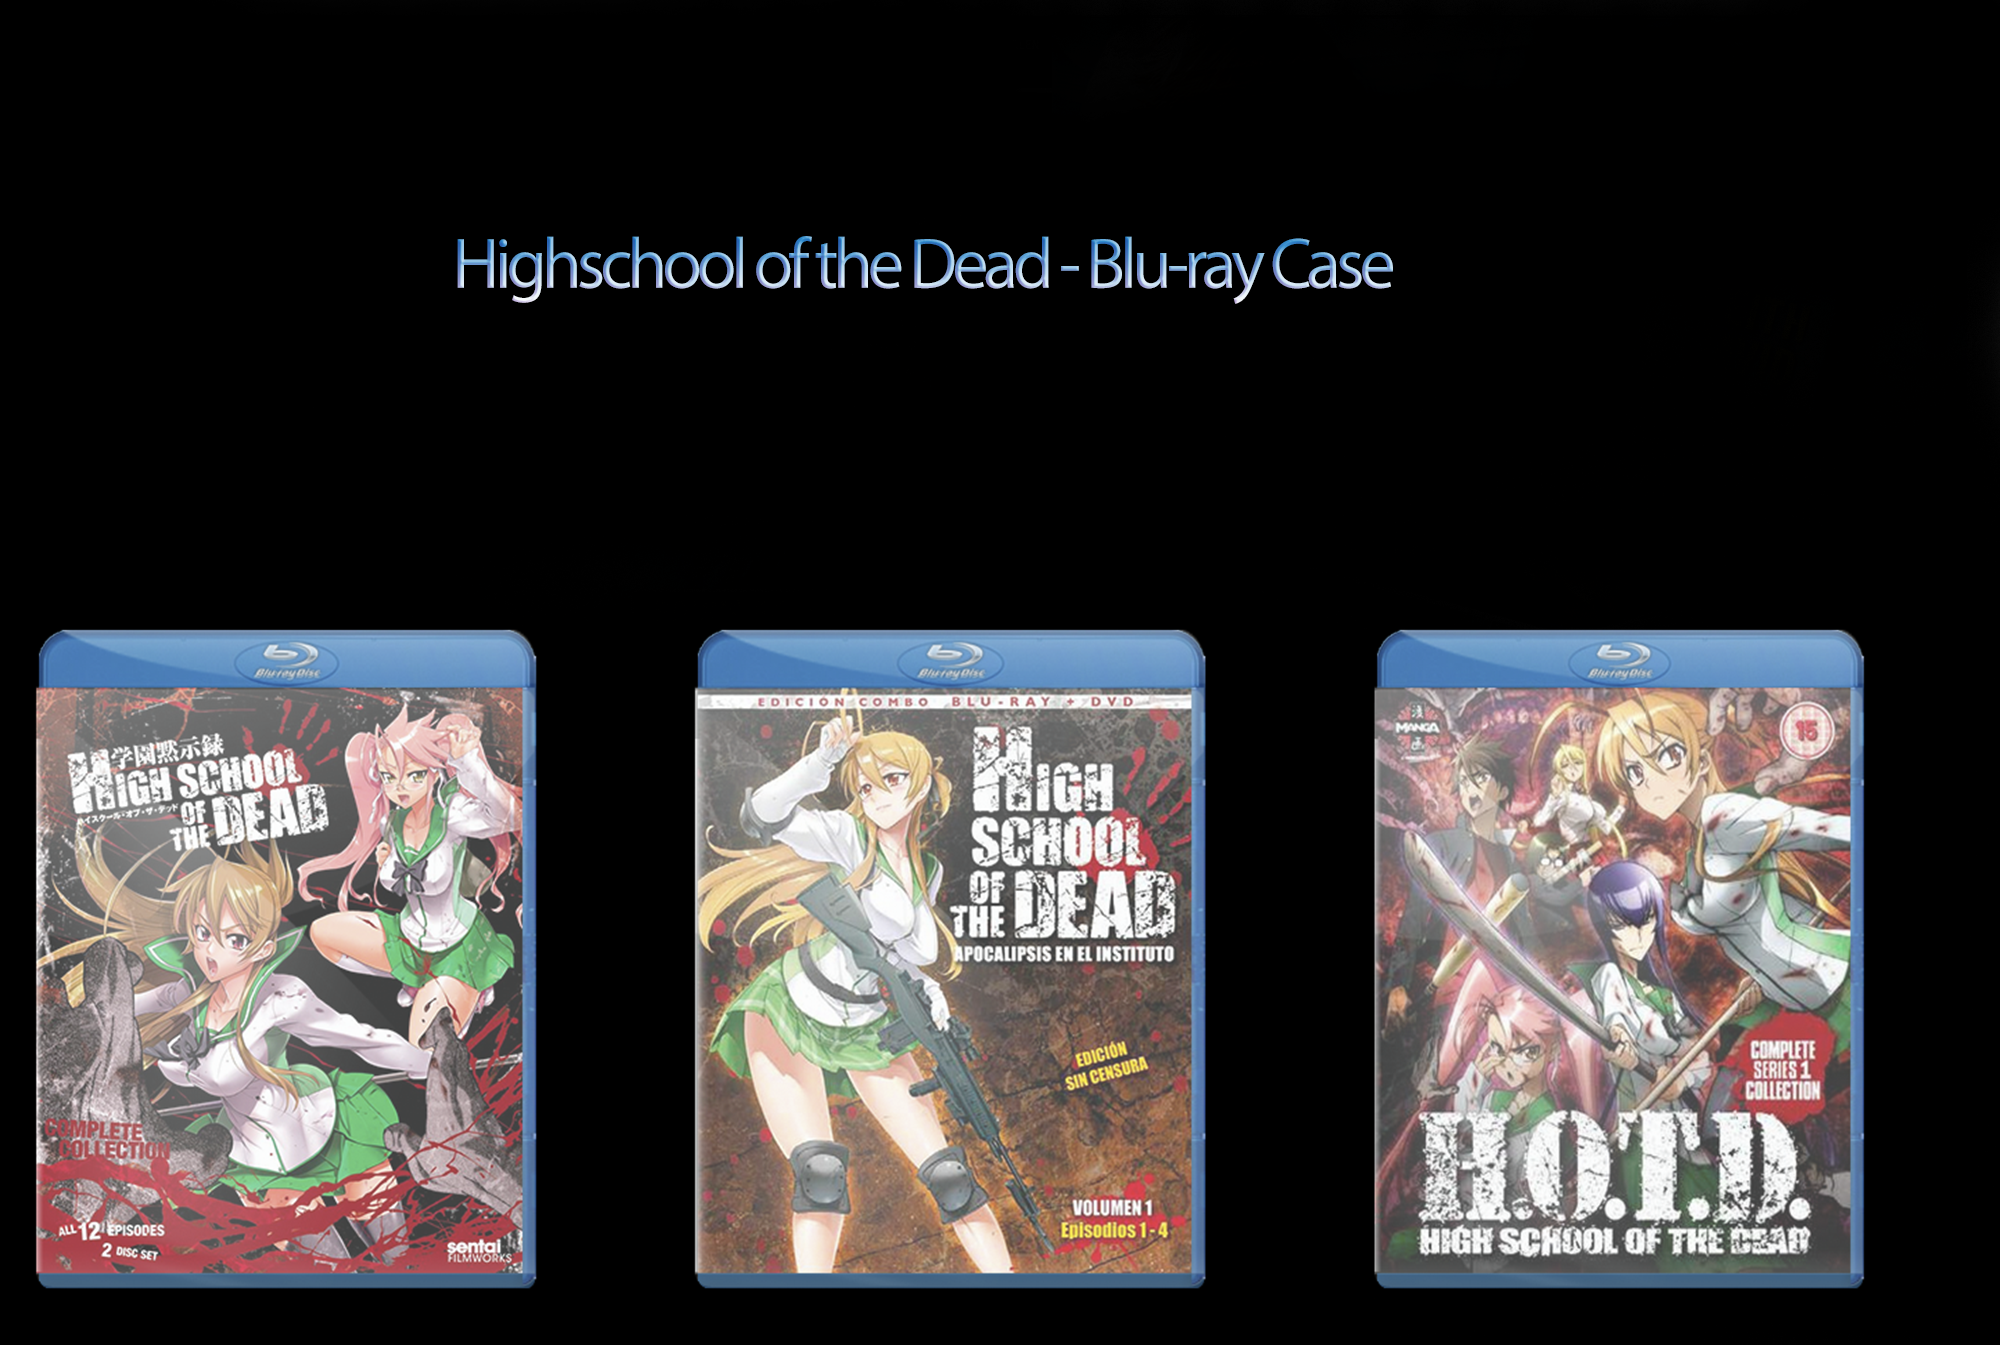 High School of the Dead Blu-ray